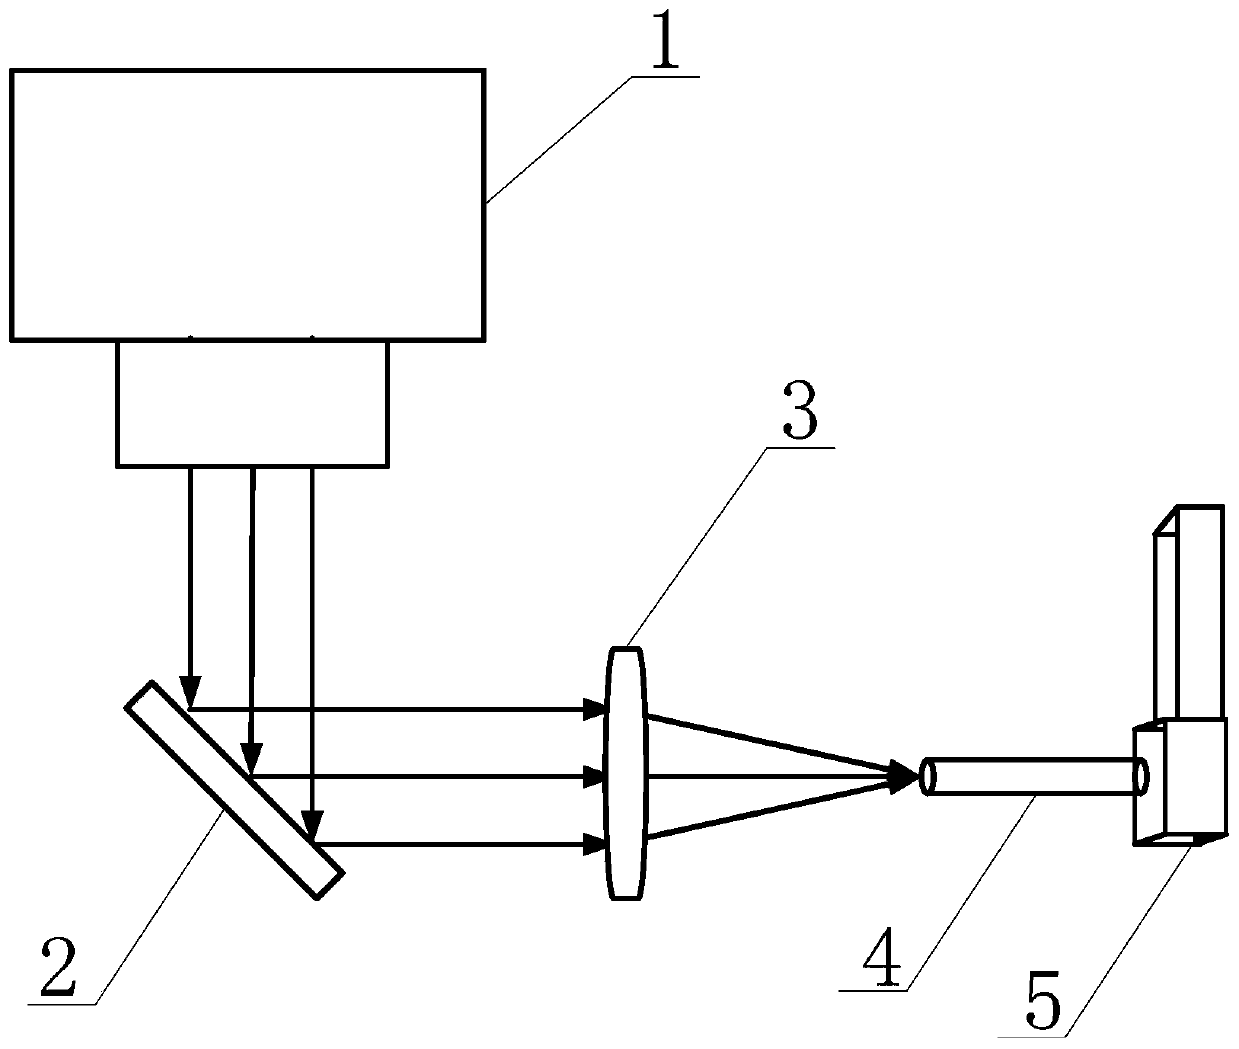 Optical spot detection method and system based on fiber coupling